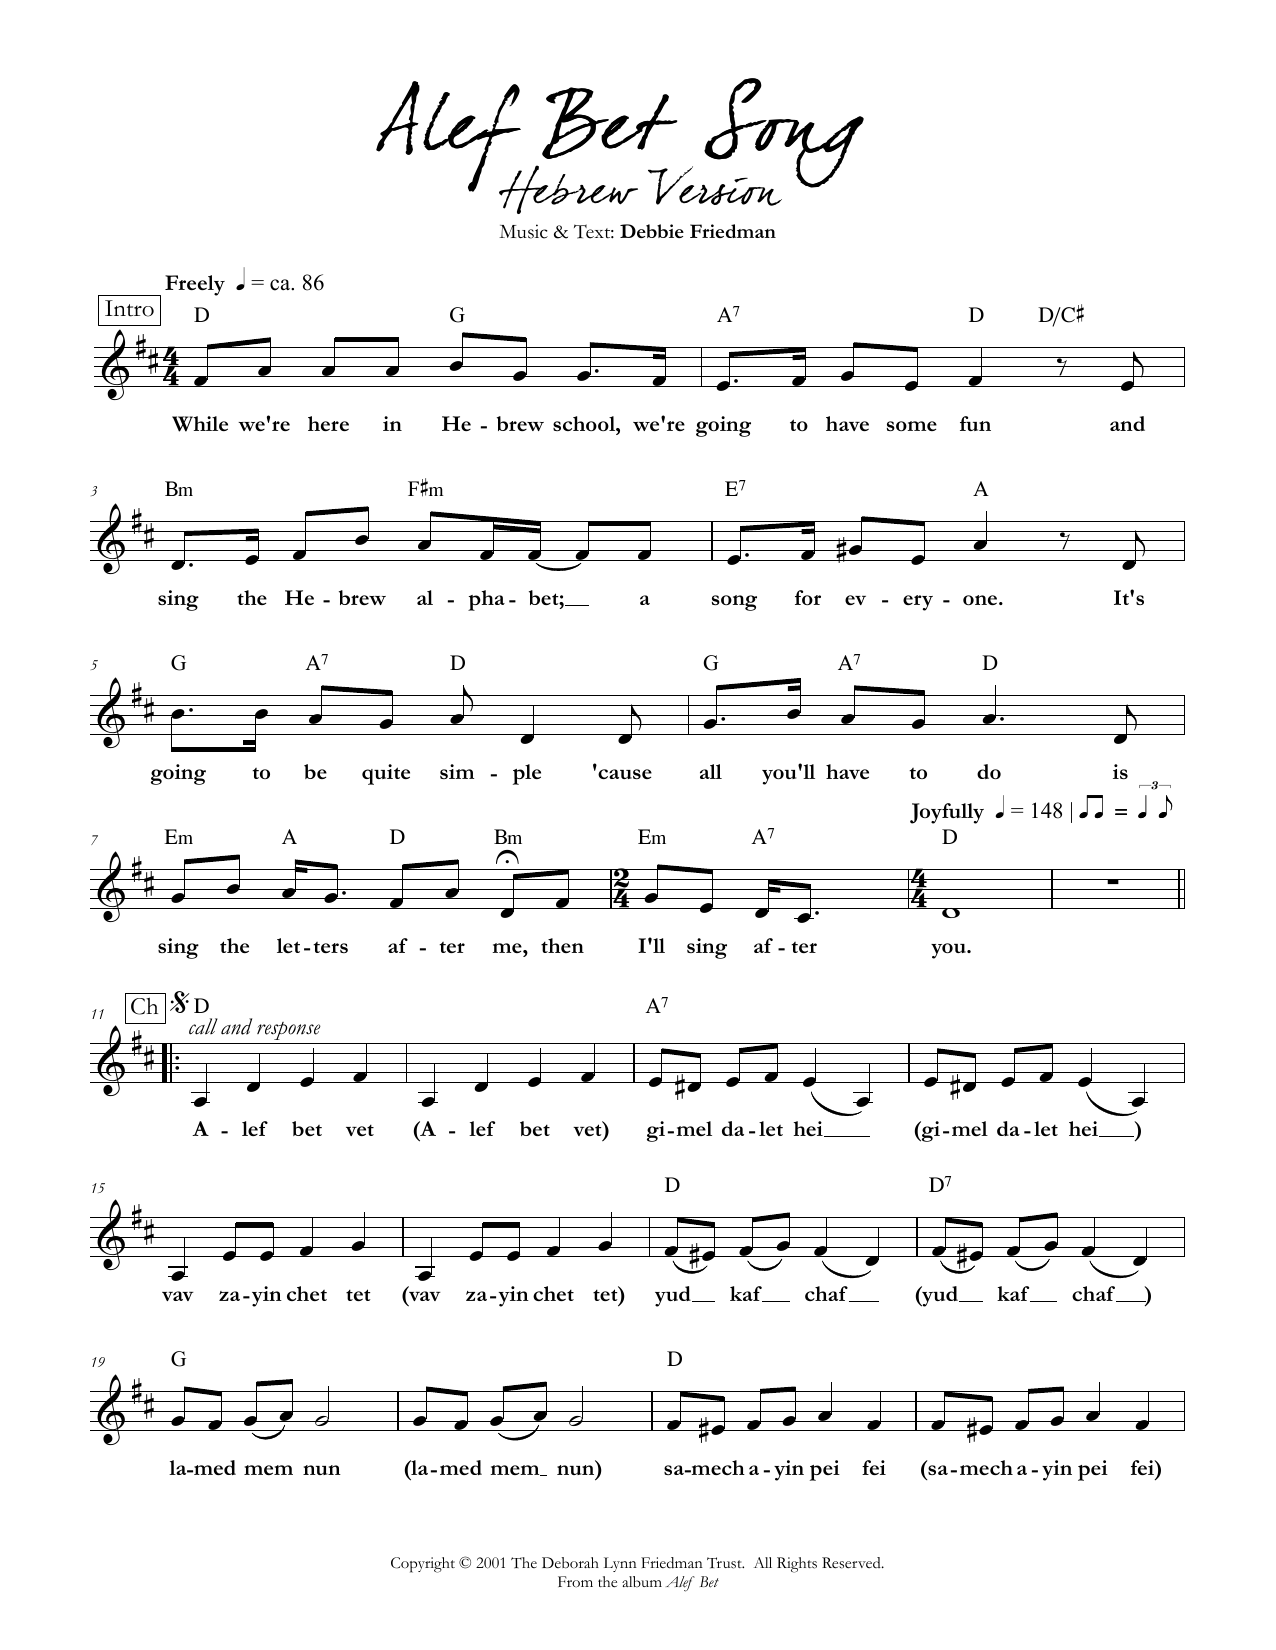 Debbie Friedman Alef Bet Song (Hebrew Version) Sheet Music Notes & Chords for Lead Sheet / Fake Book - Download or Print PDF